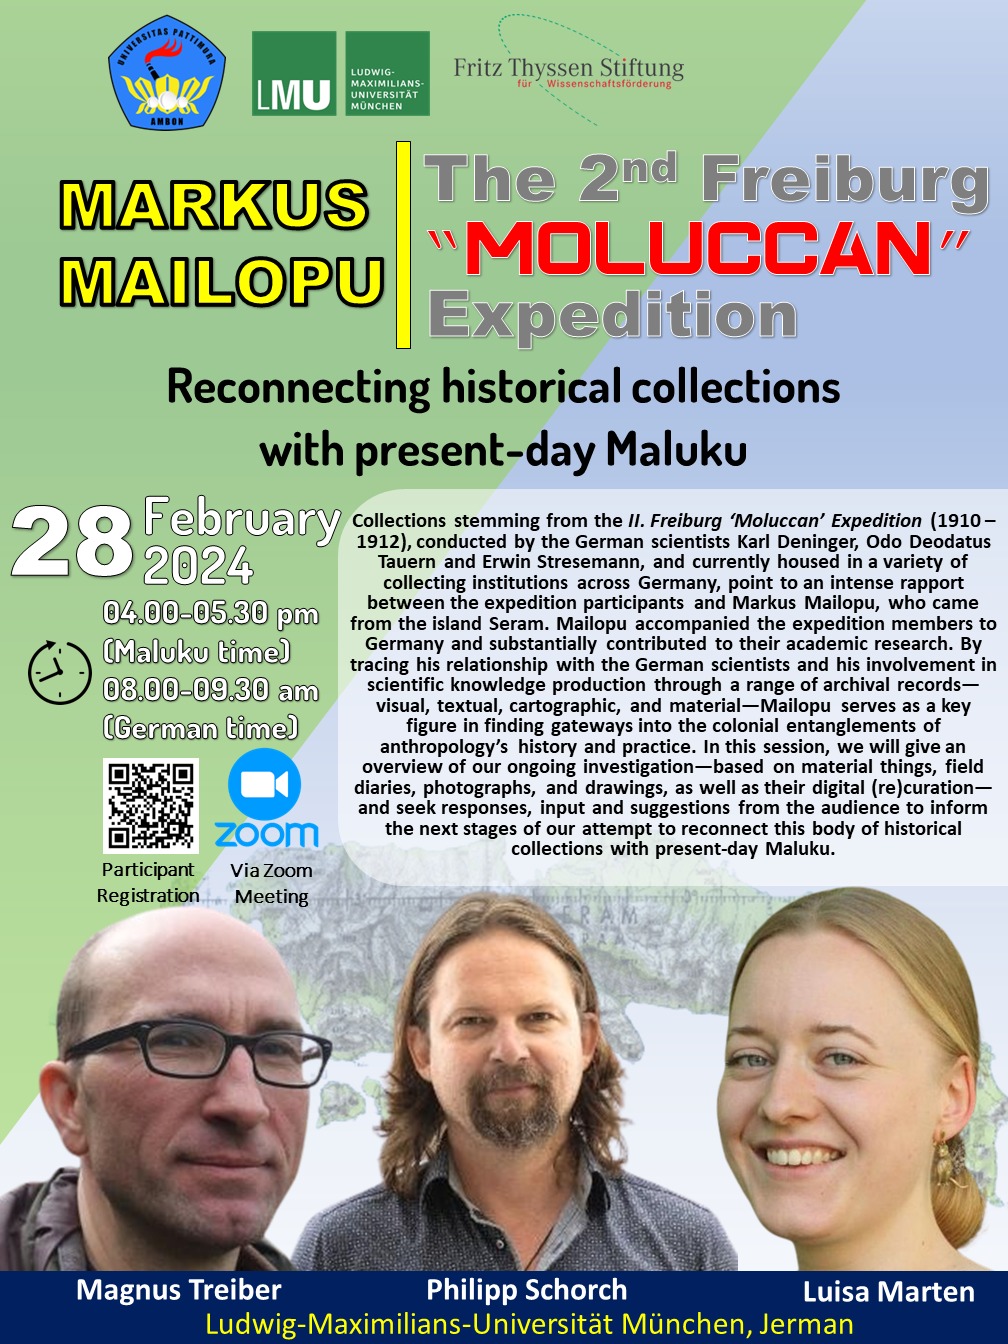 Poster Markus Mailopu 2 Freiburg Moluccan Expedition Feb 2024